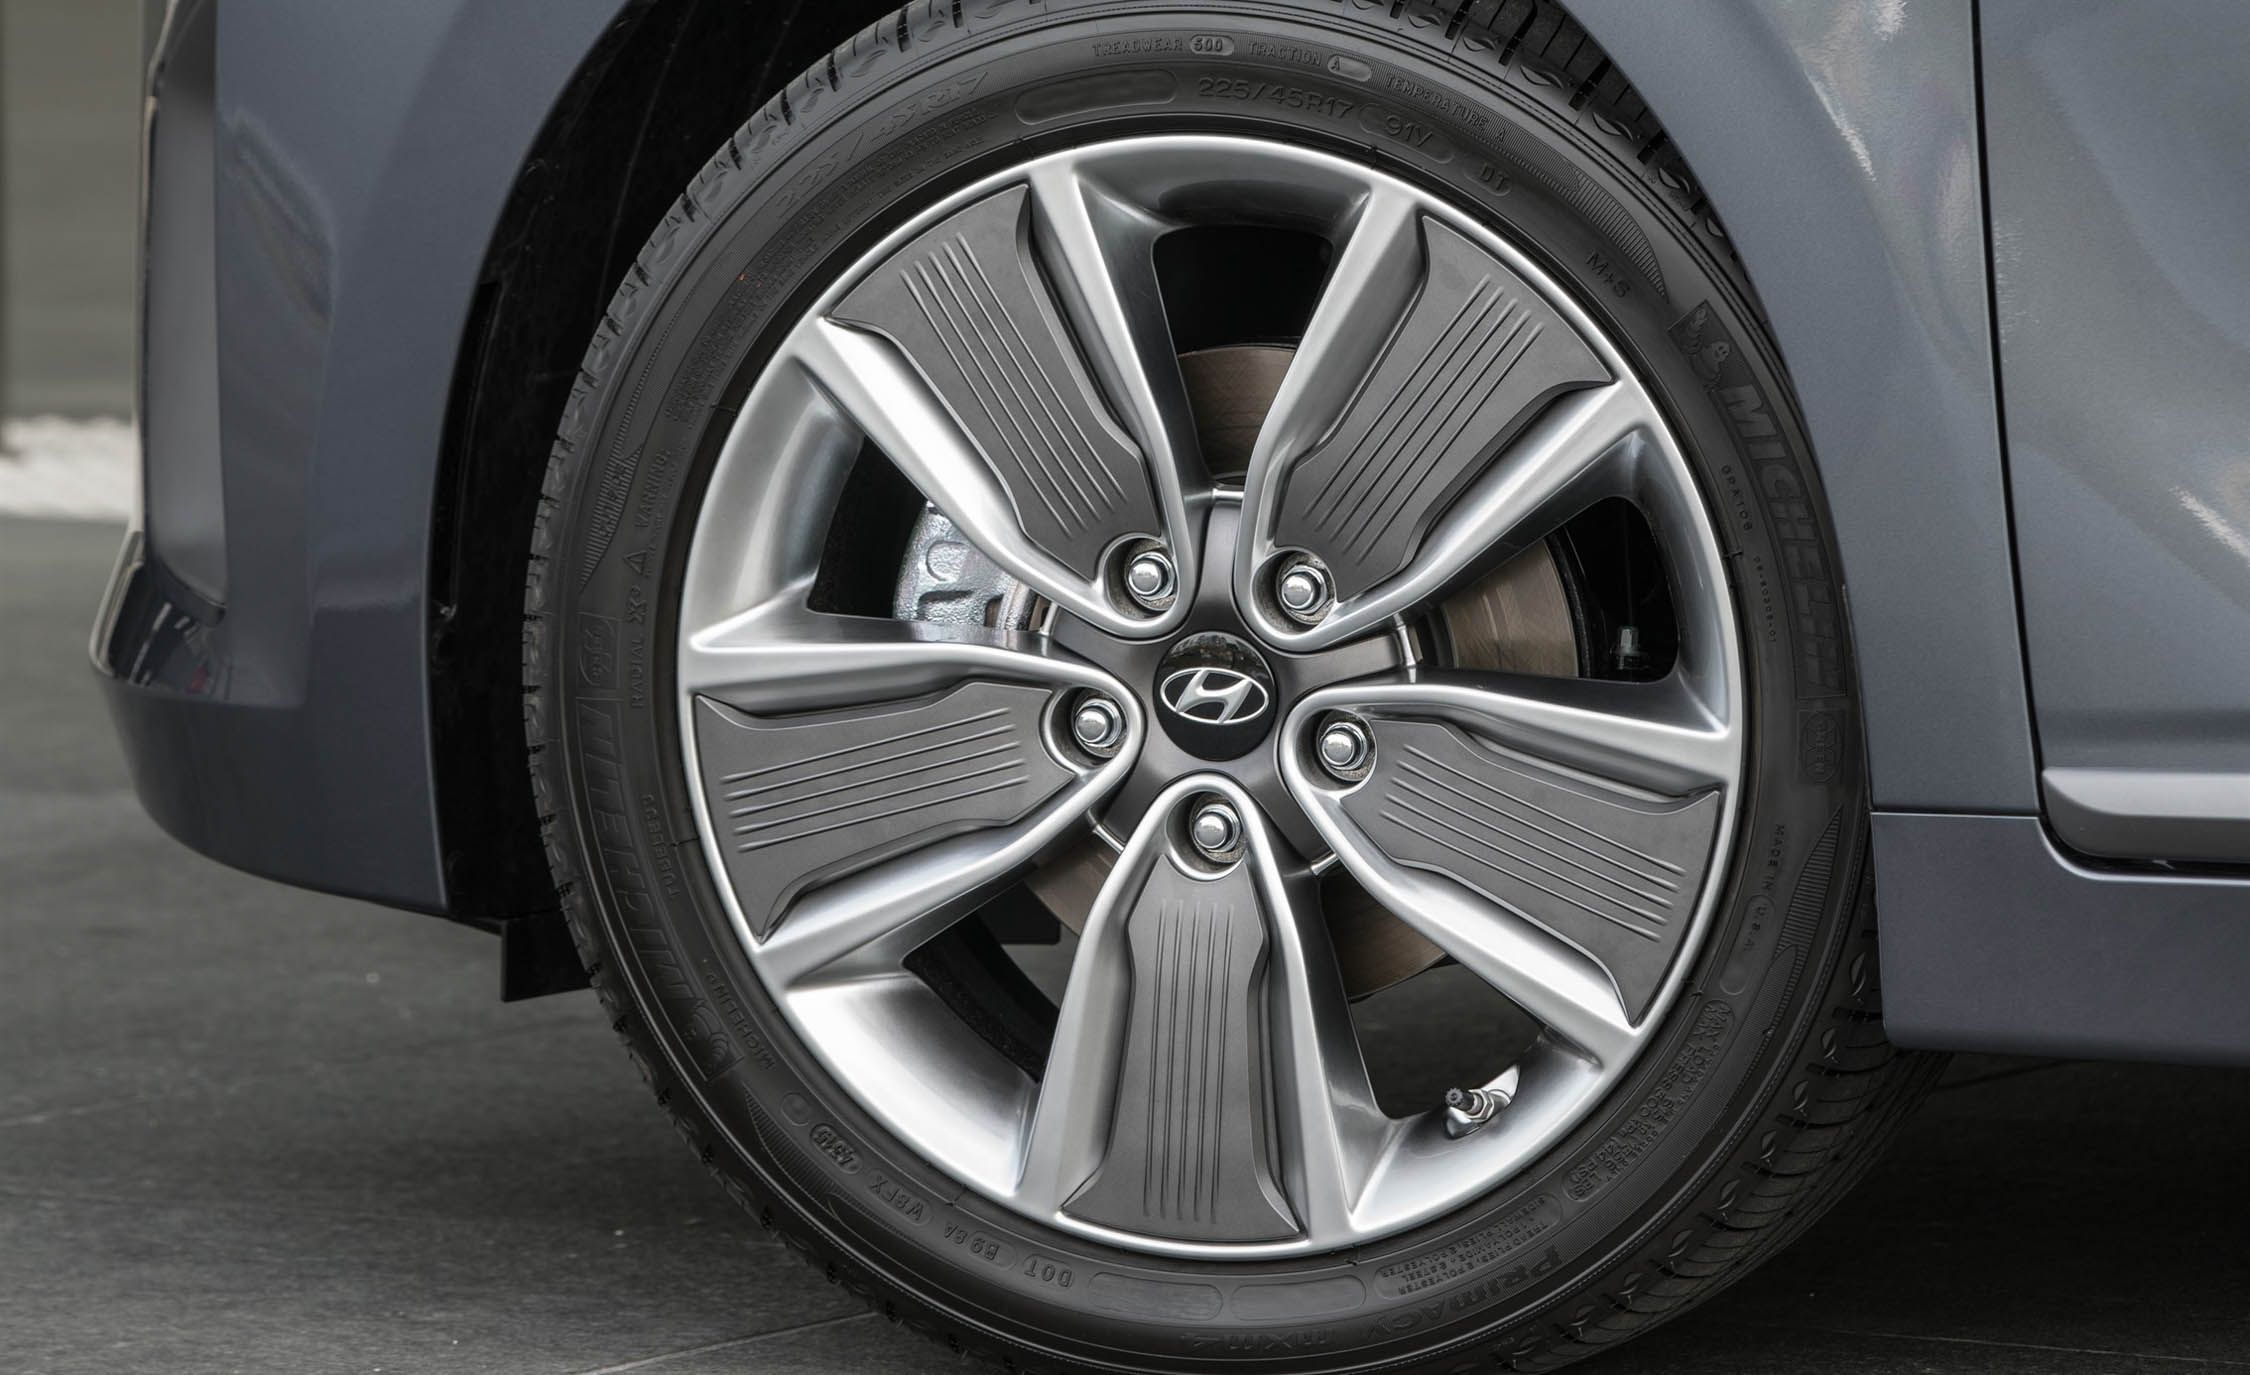 2017 Hyundai Ioniq Hybrid Exterior View Wheel Trim (View 24 of 67)